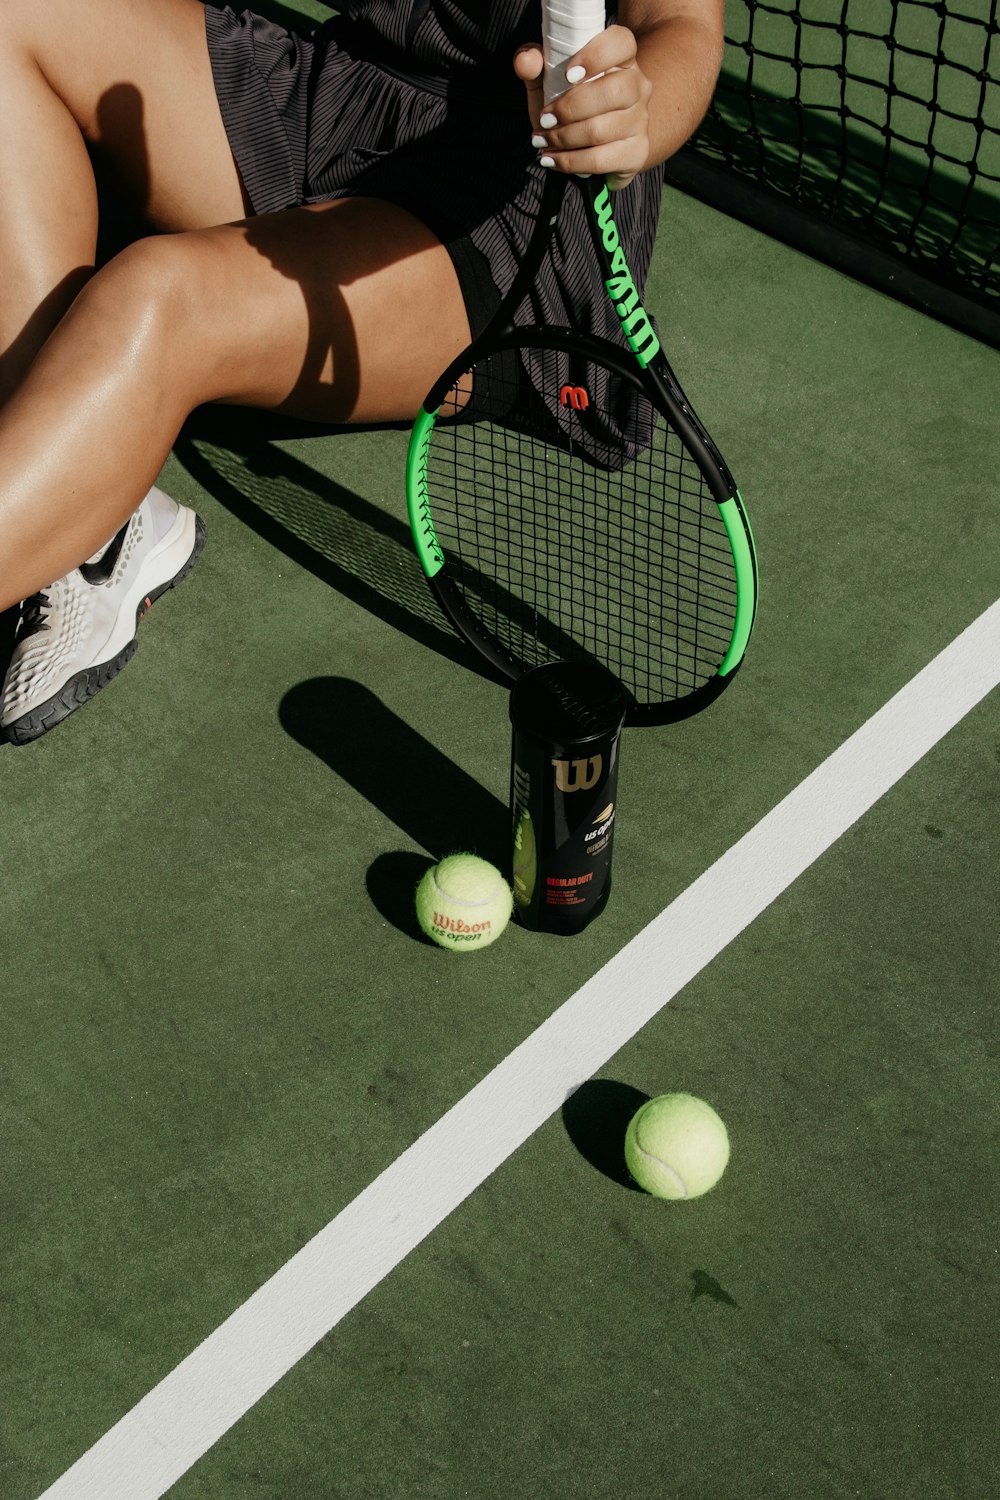 woman sitting while holding tennis racket beside balls